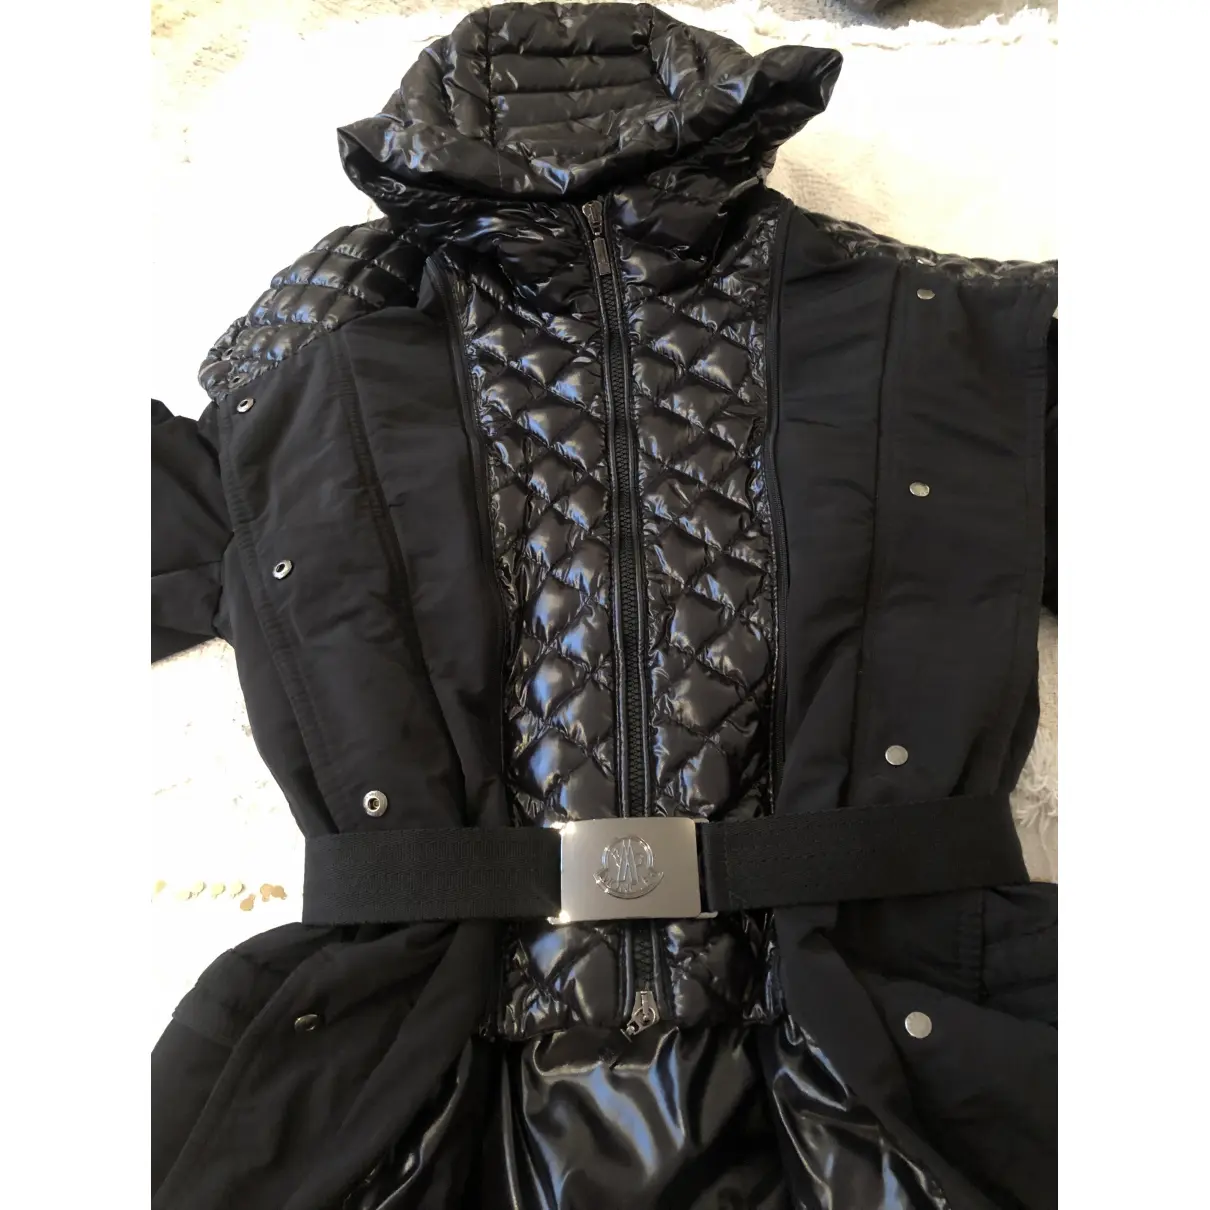 Buy Moncler Black Synthetic Coat online